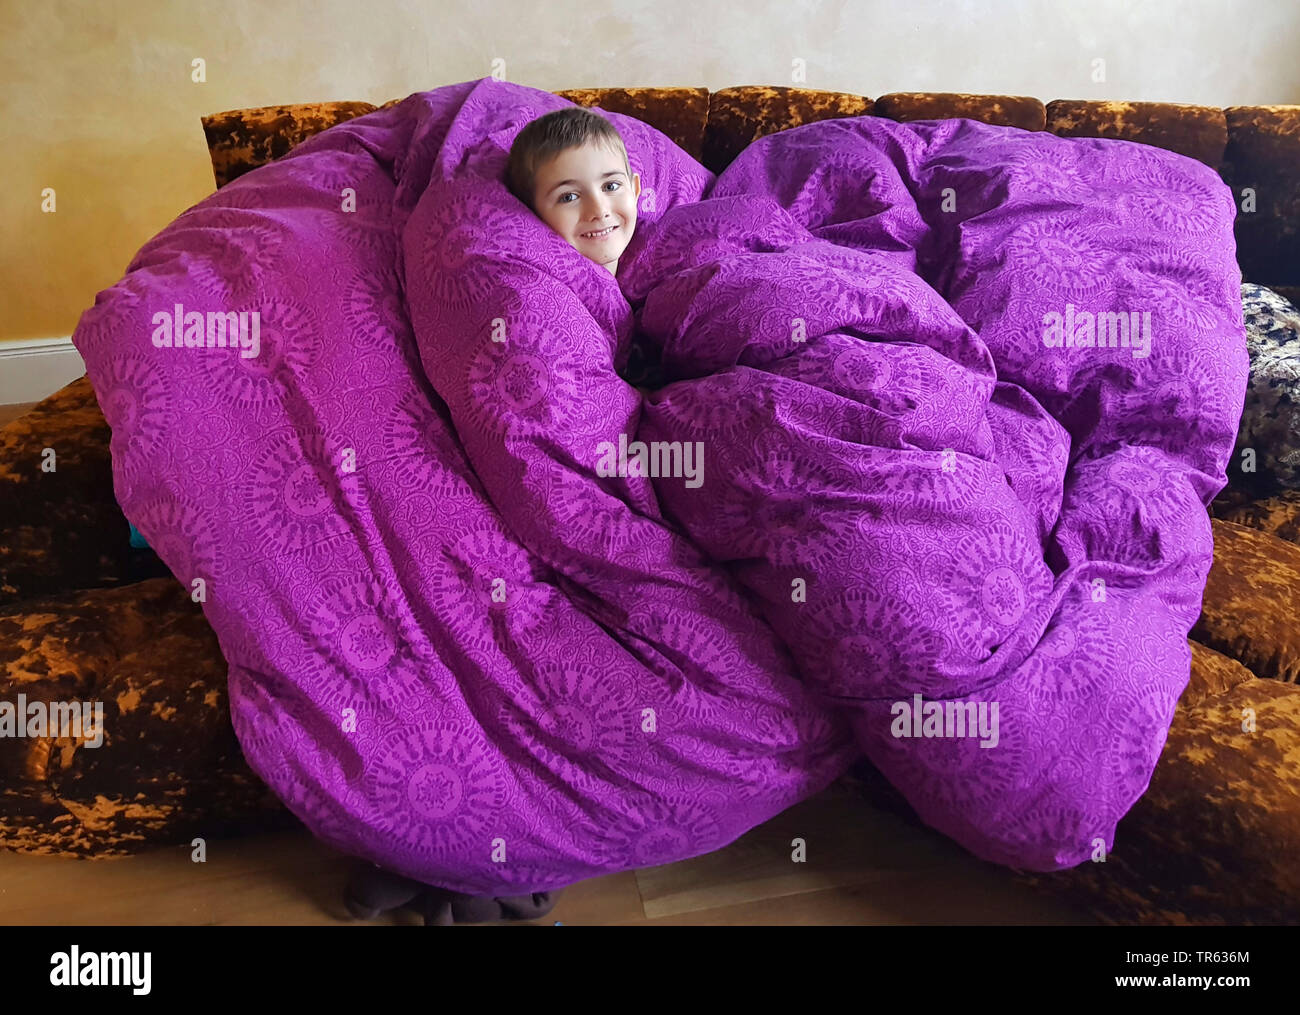 Colcha violeta fotografías e imágenes de alta resolución - Alamy